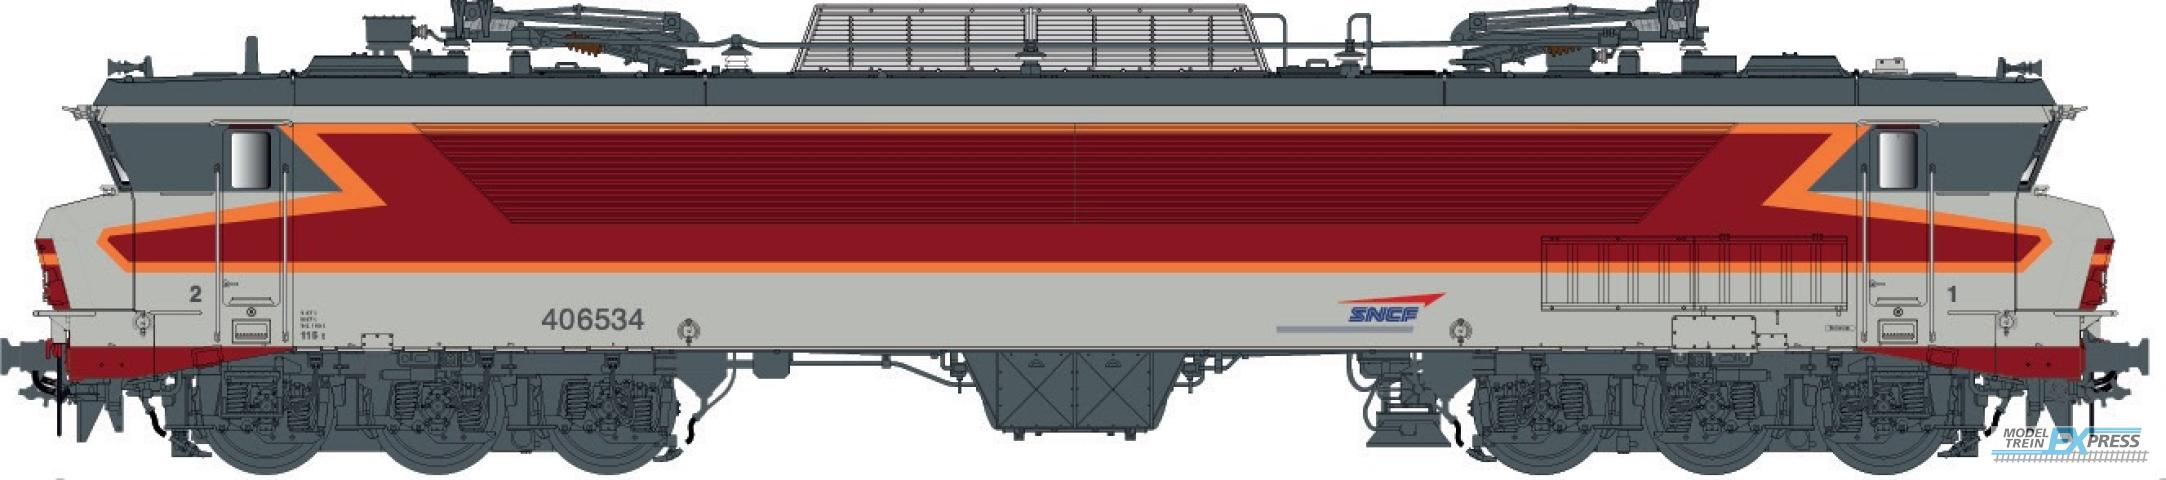 LS Models 10830S CC 6534, grey/red/orange, livery ARZENS, logo cap,Vénissieux depot  /  Ep. V  /  SNCF  /  HO  /  AC SOUND  /  1 P.